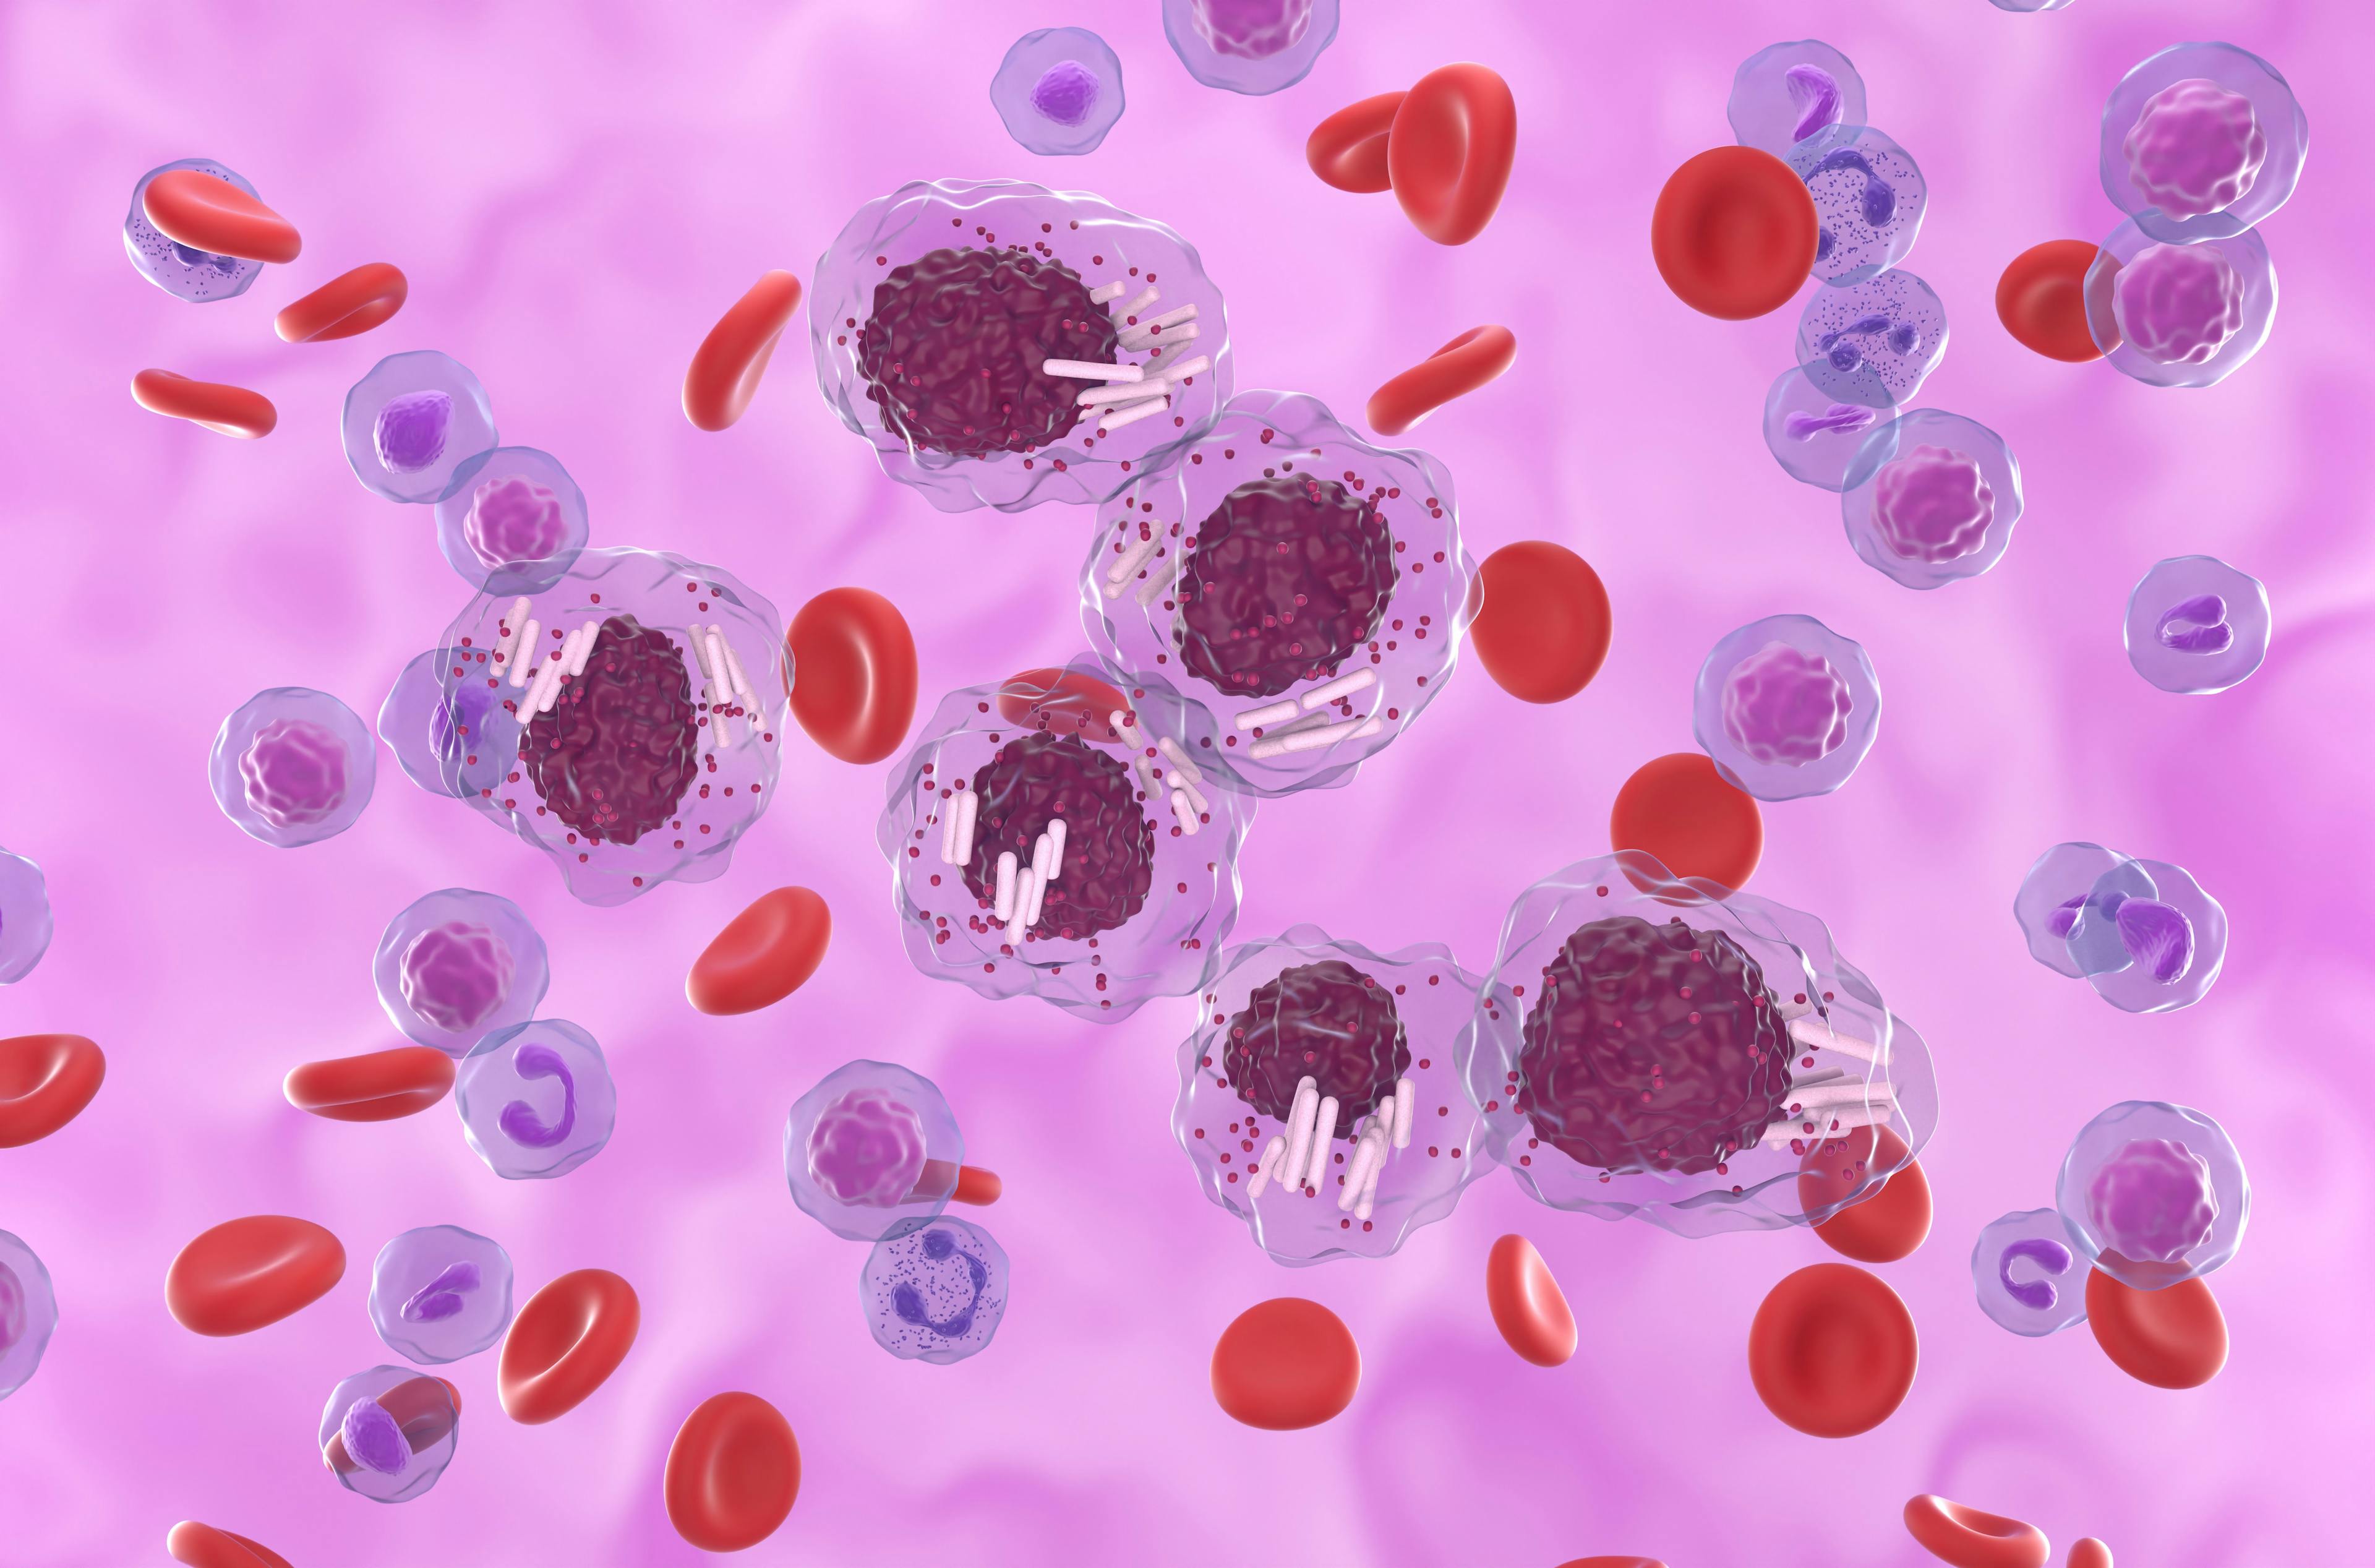 Chronic lymphocytic leukemia (CLL) cells cluster in blood flow -- Image credit: LASZLO | stock.adobe.com